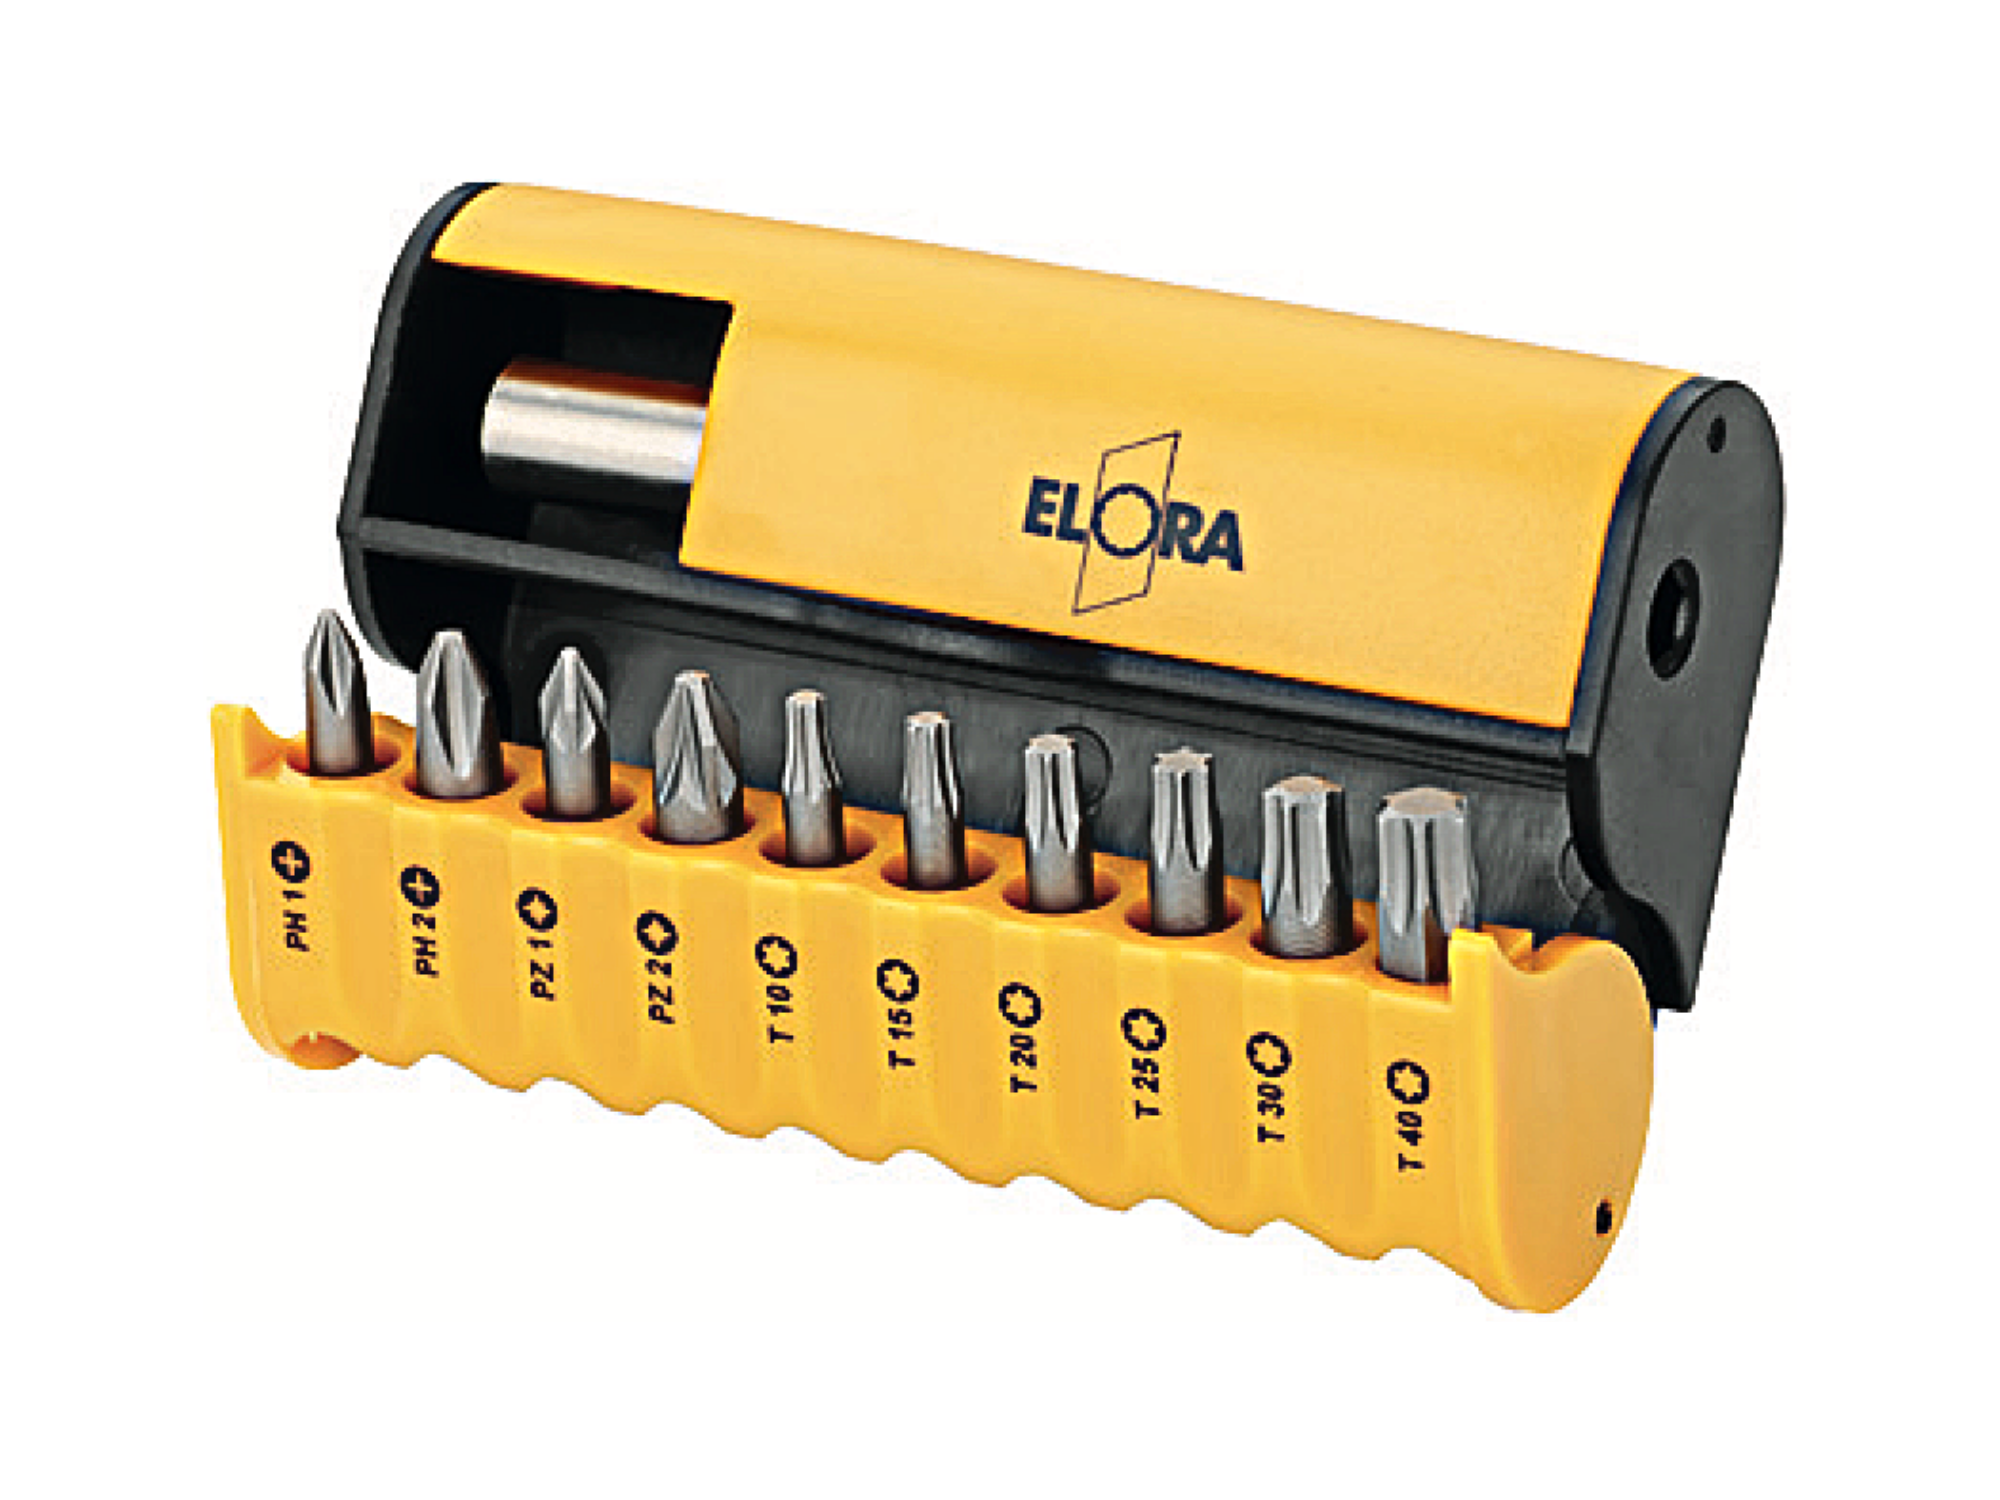 ELORA 3453-S11 Bit-Box 1/4" 11 pcs (ELORA Tools) - Premium Bit-Box from ELORA - Shop now at Yew Aik.